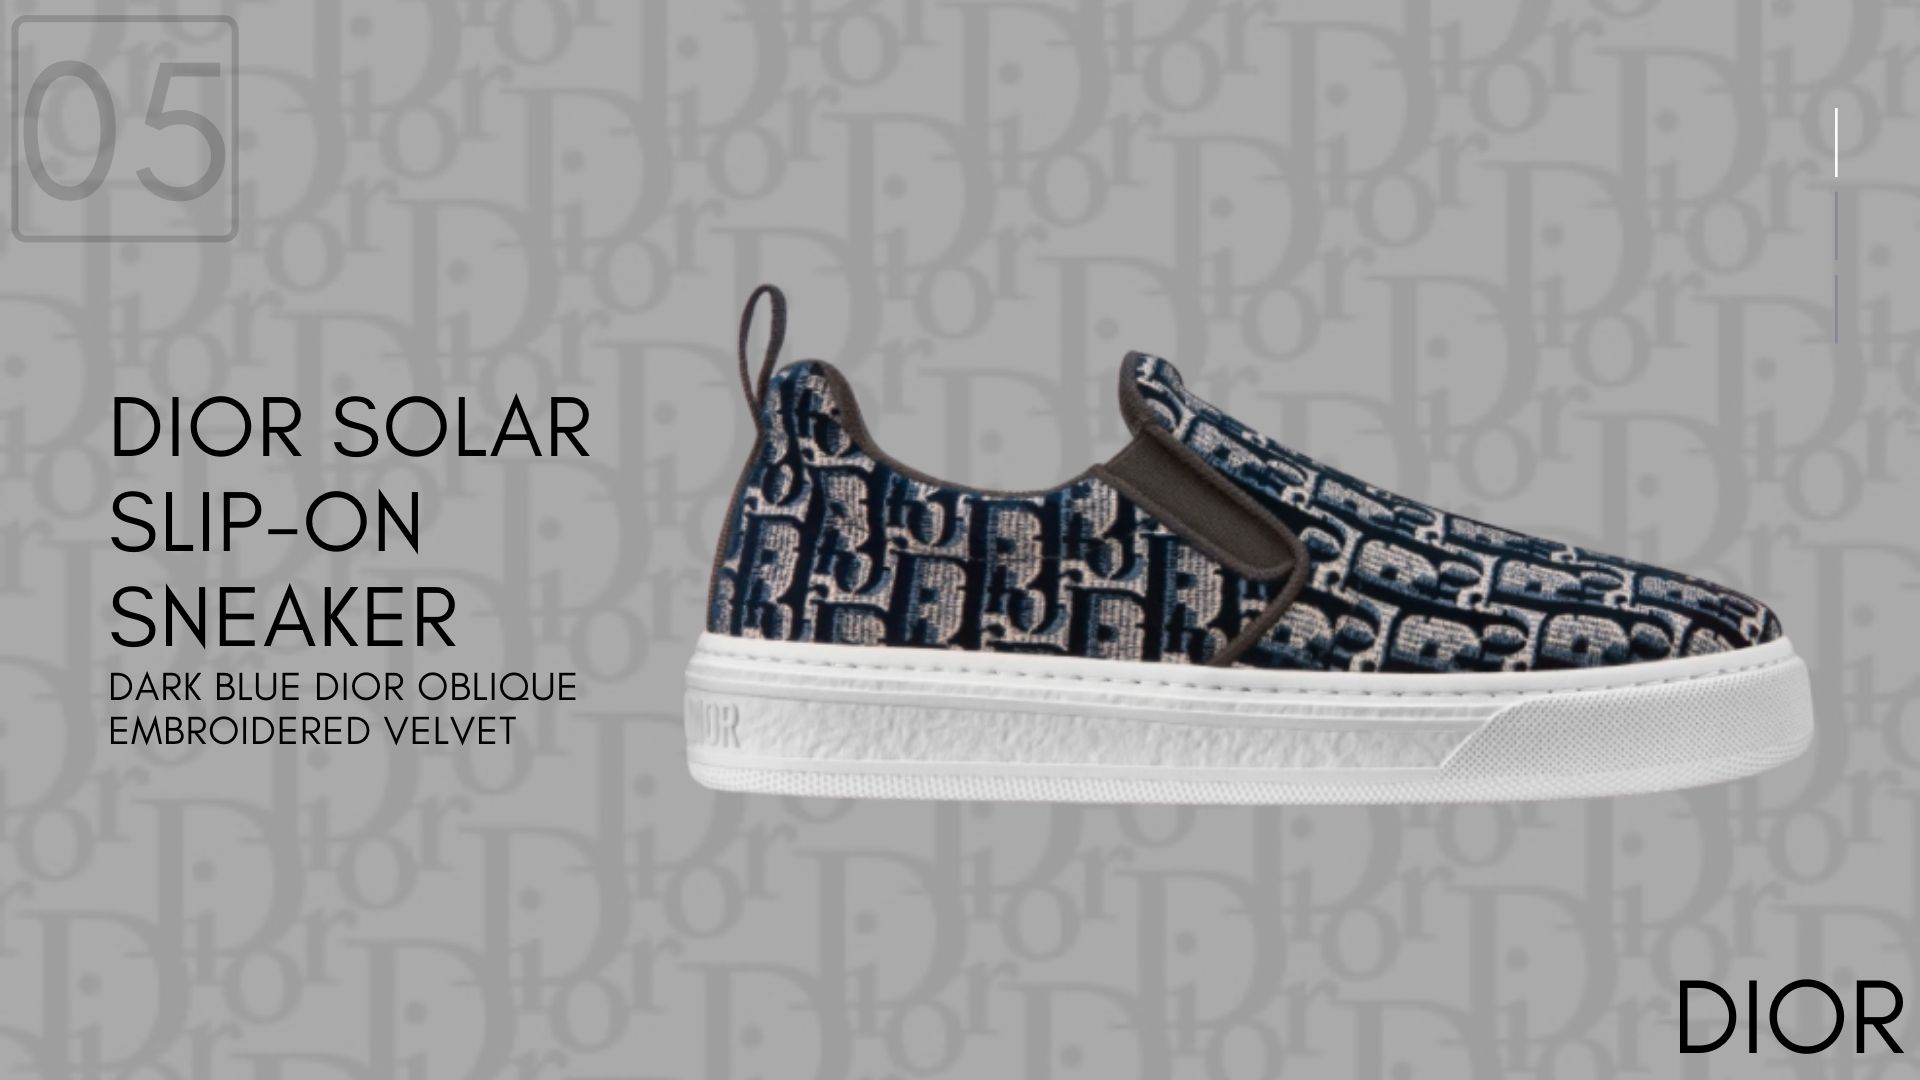 DIOR SOLAR SLIP-ON Dark Blue Dior Oblique Embroidered Velvet-Dior Sneakers-รองเท้าดิออร์